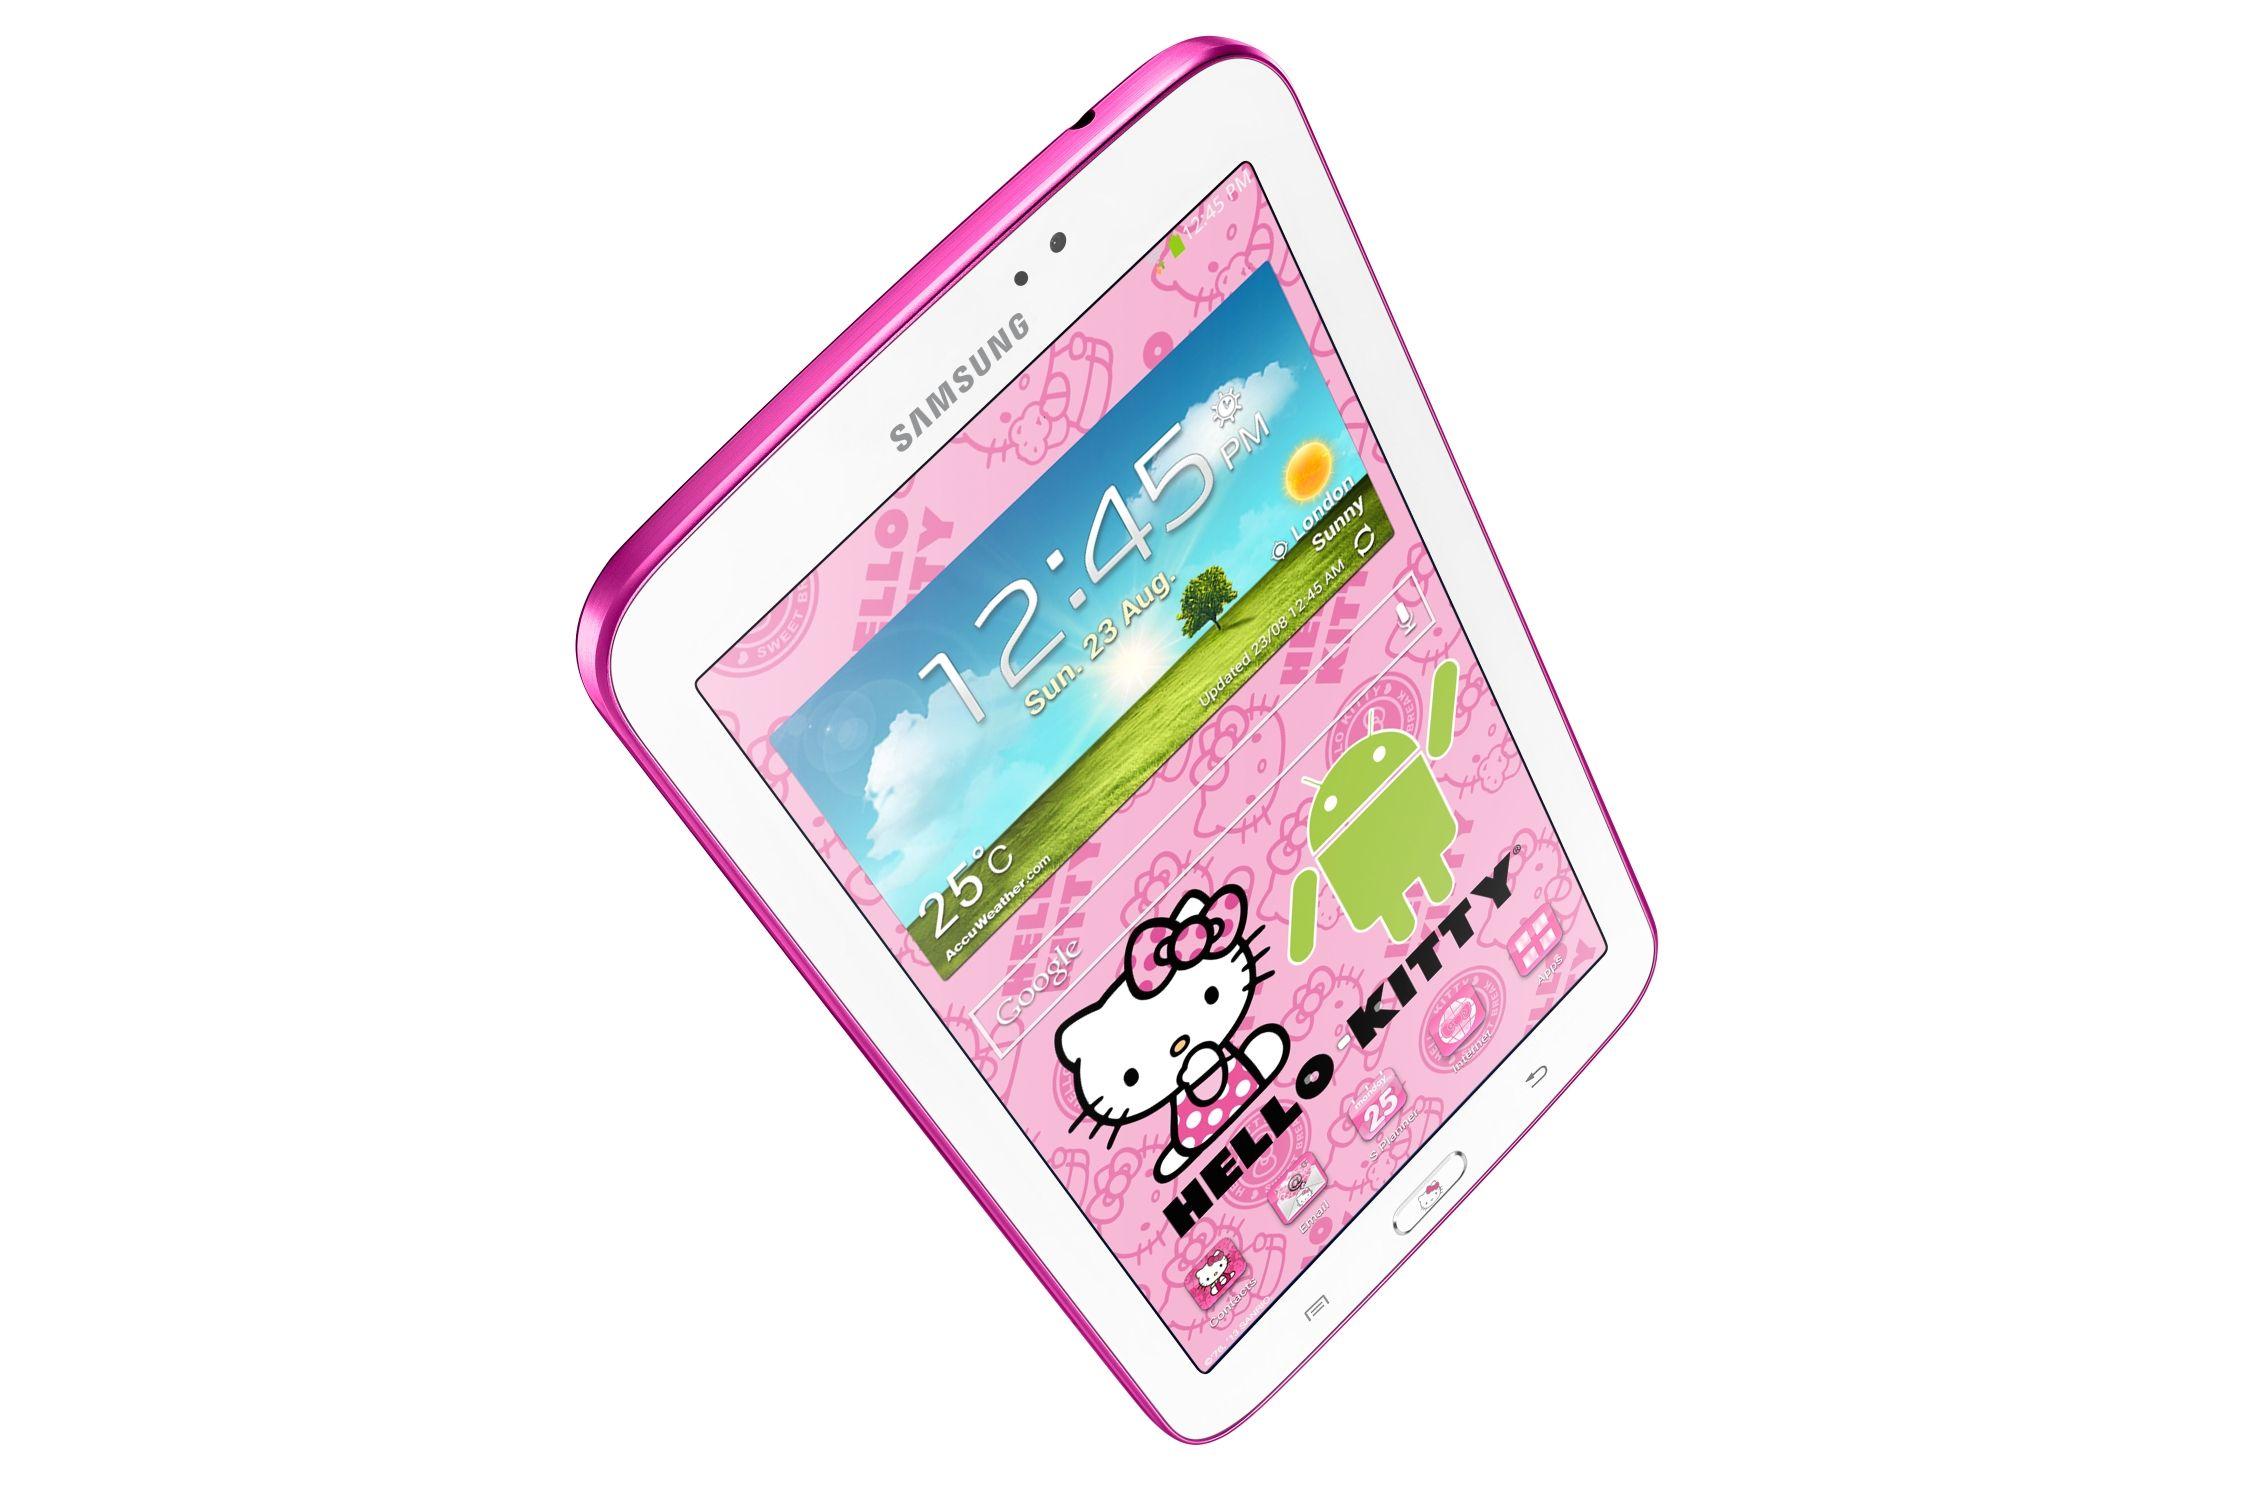 Samsung Galaxy Tab 3 7.0 Hello Kitty Edition Release October 2013